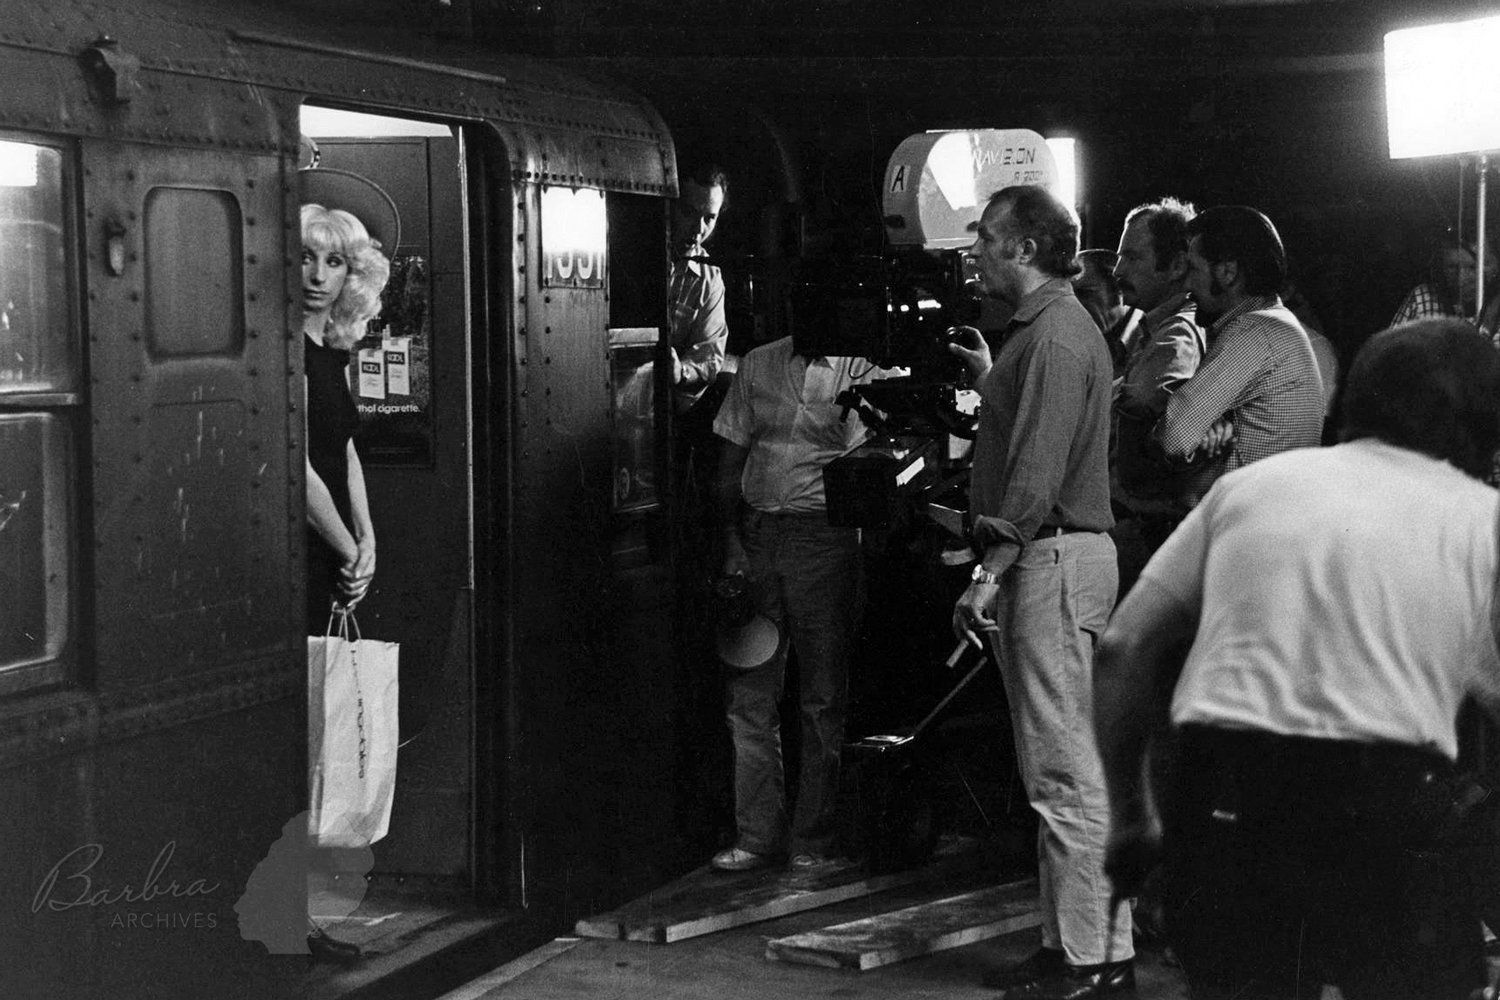 The crew of the movie filming at Brooklyn's Hoyt-Schermerhorn subway platform.